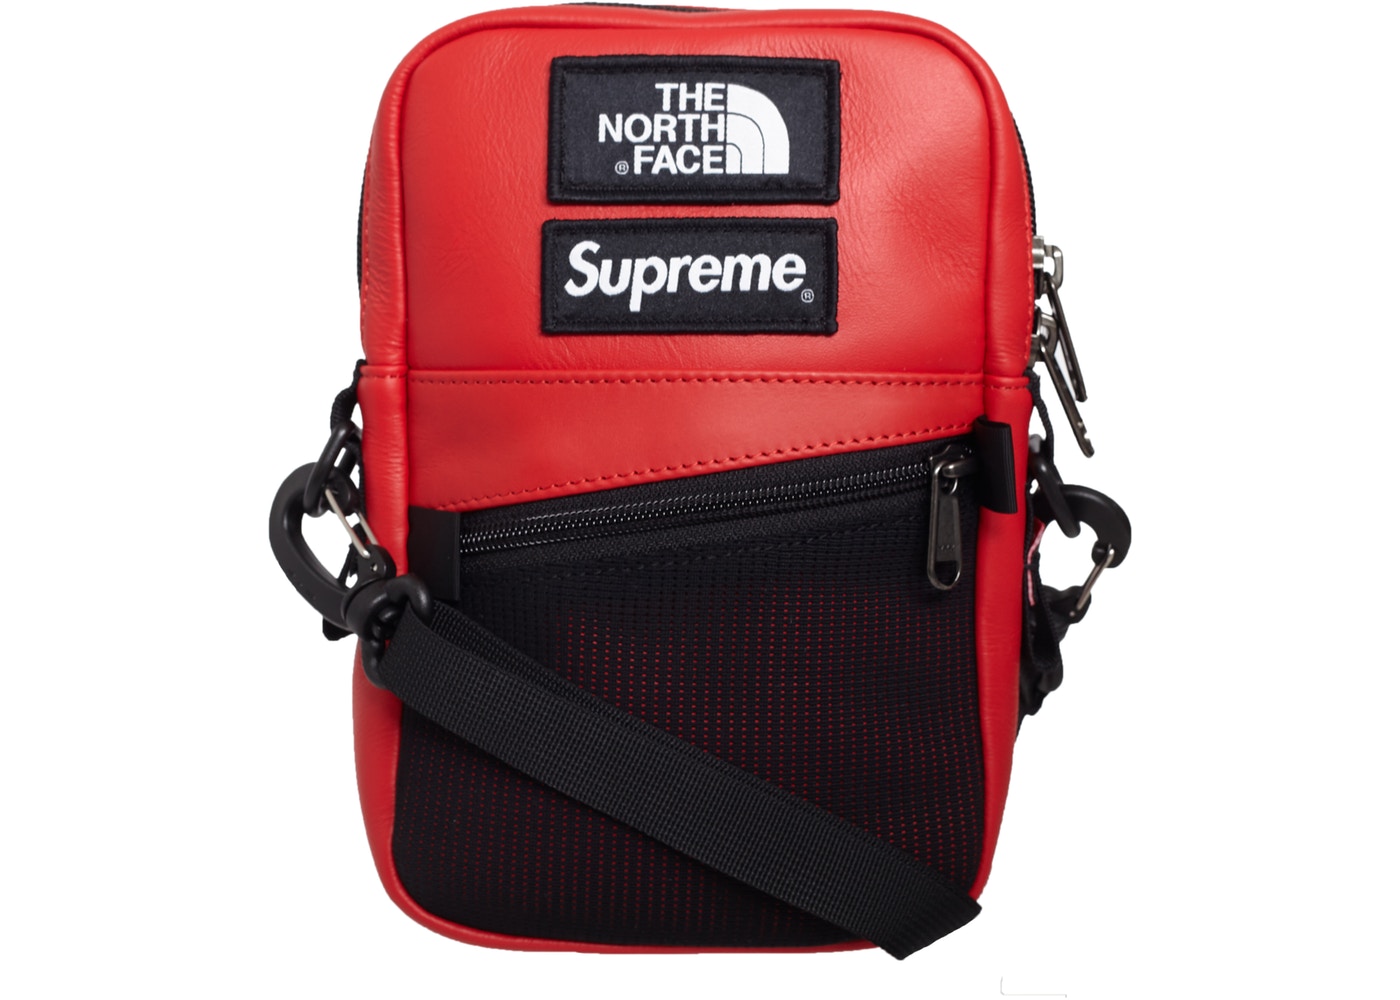 Supreme/The NorthFace Leathershoulderbag